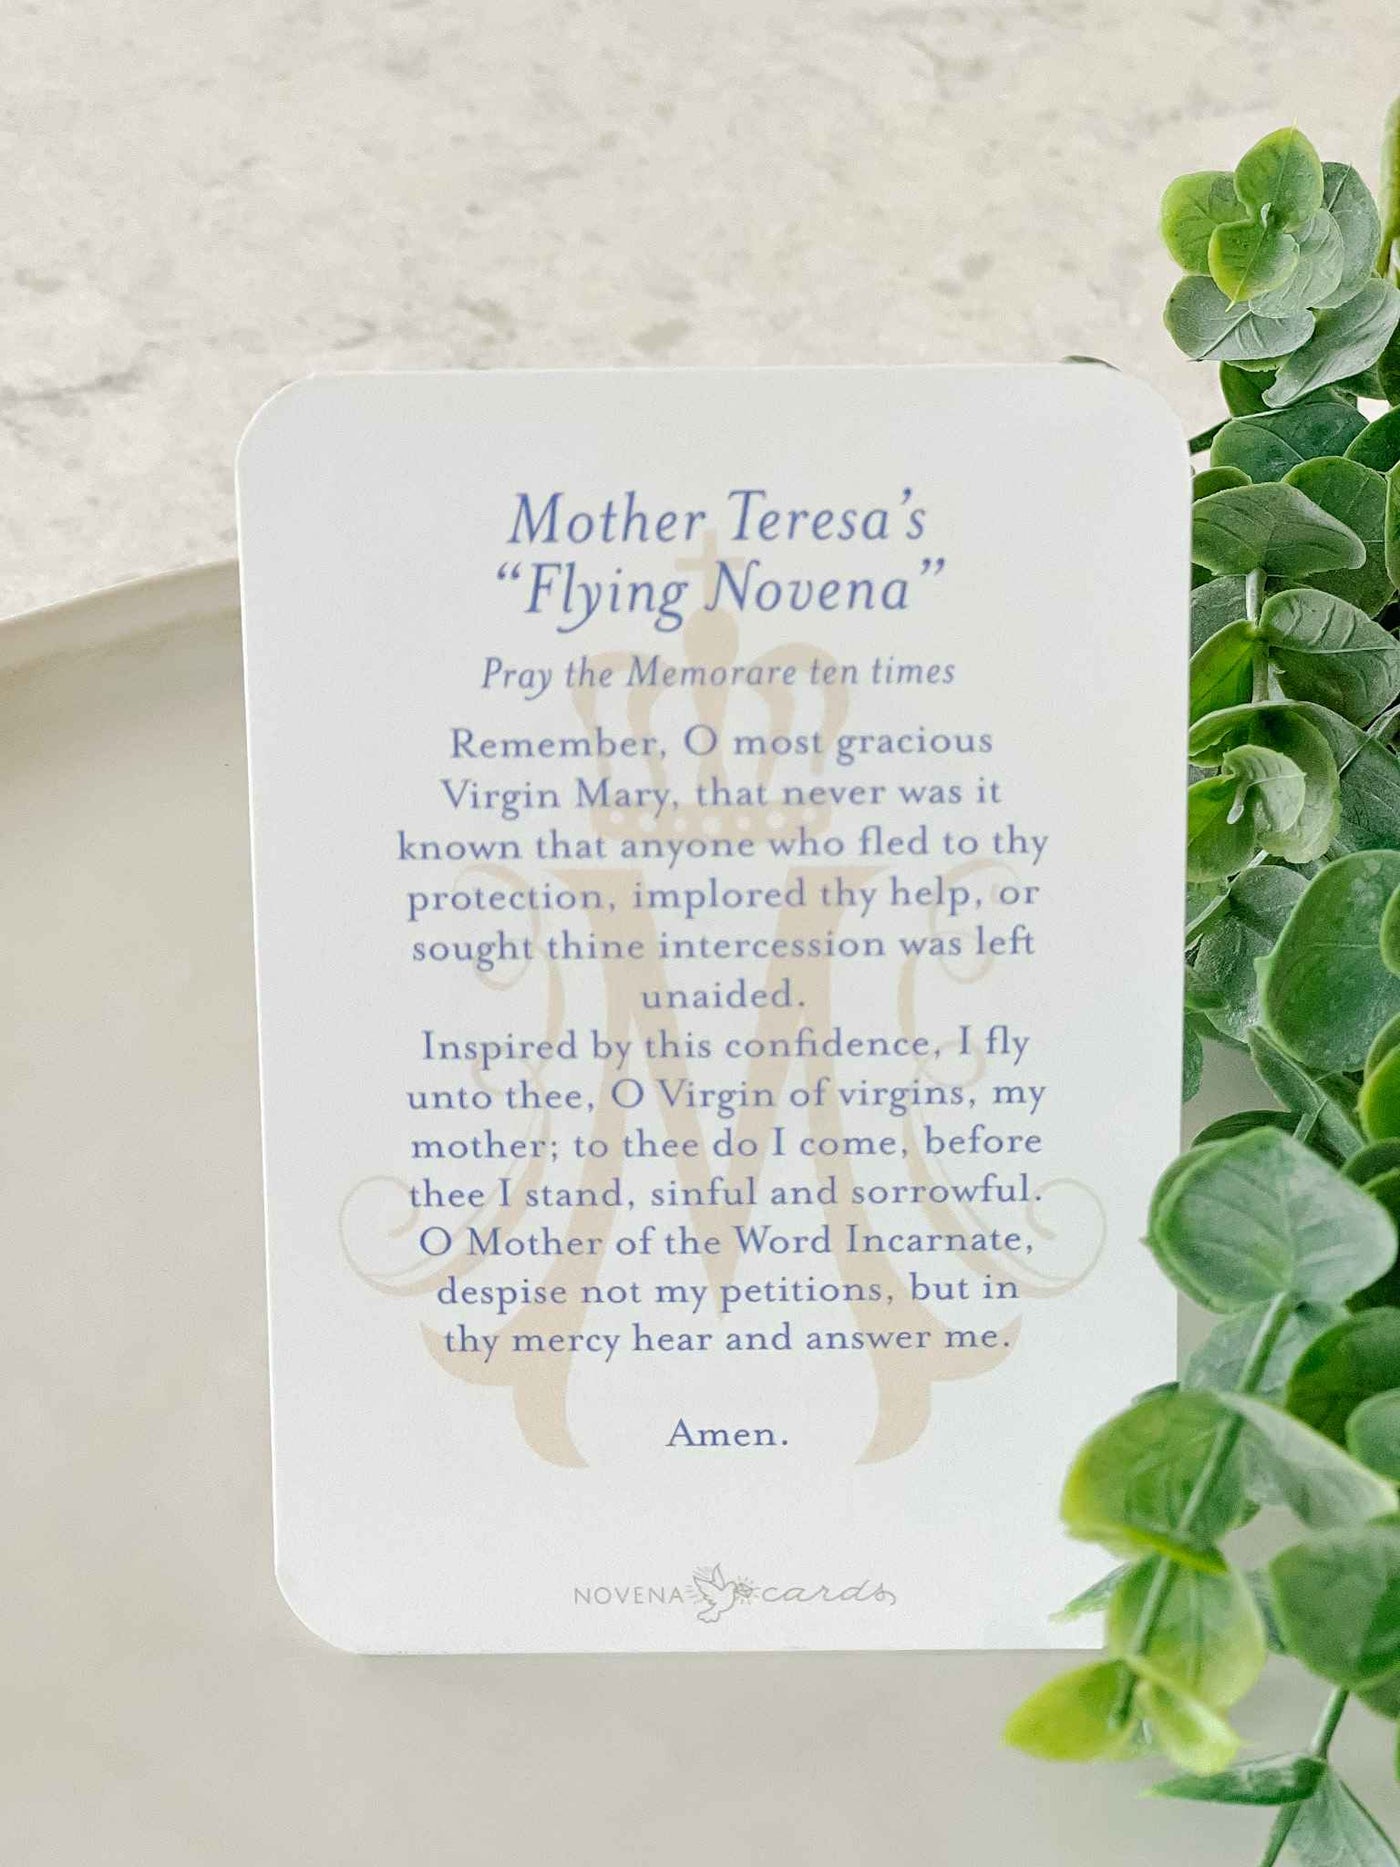 Saint Teresa of Calcutta - Prayer Card